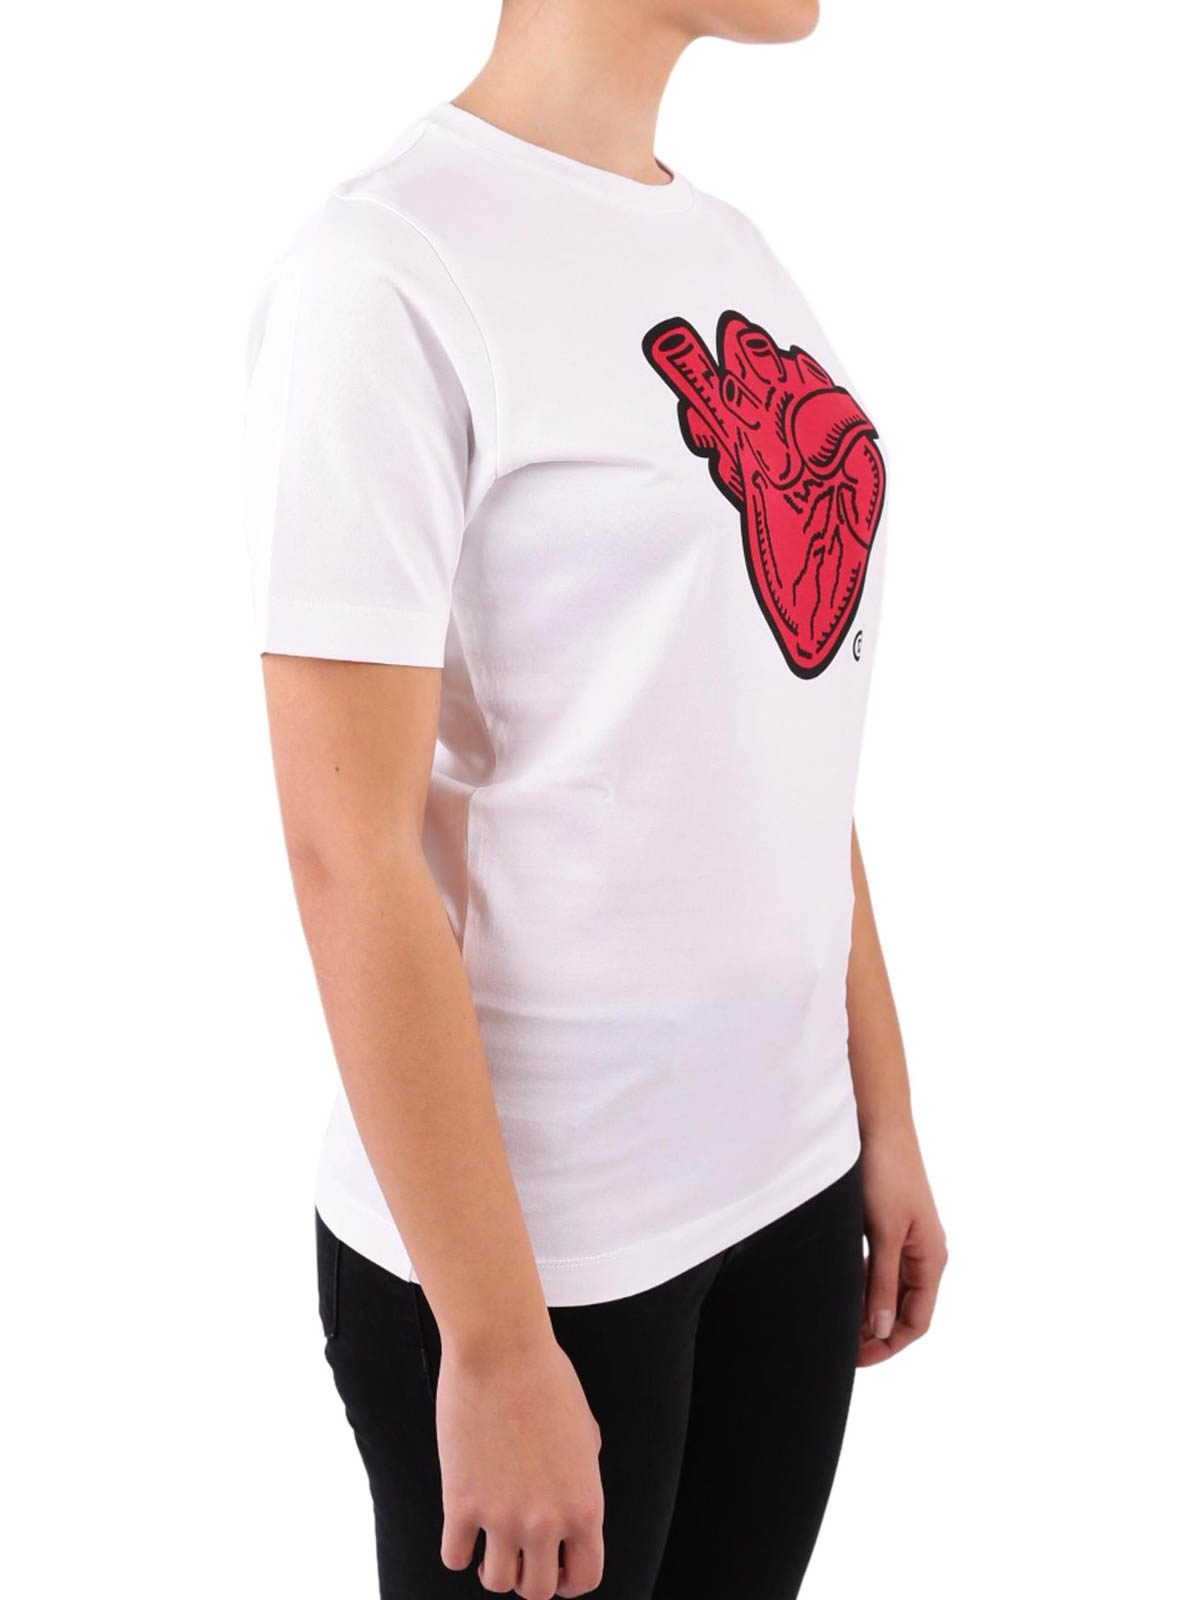 dsquared2 t shirt heart